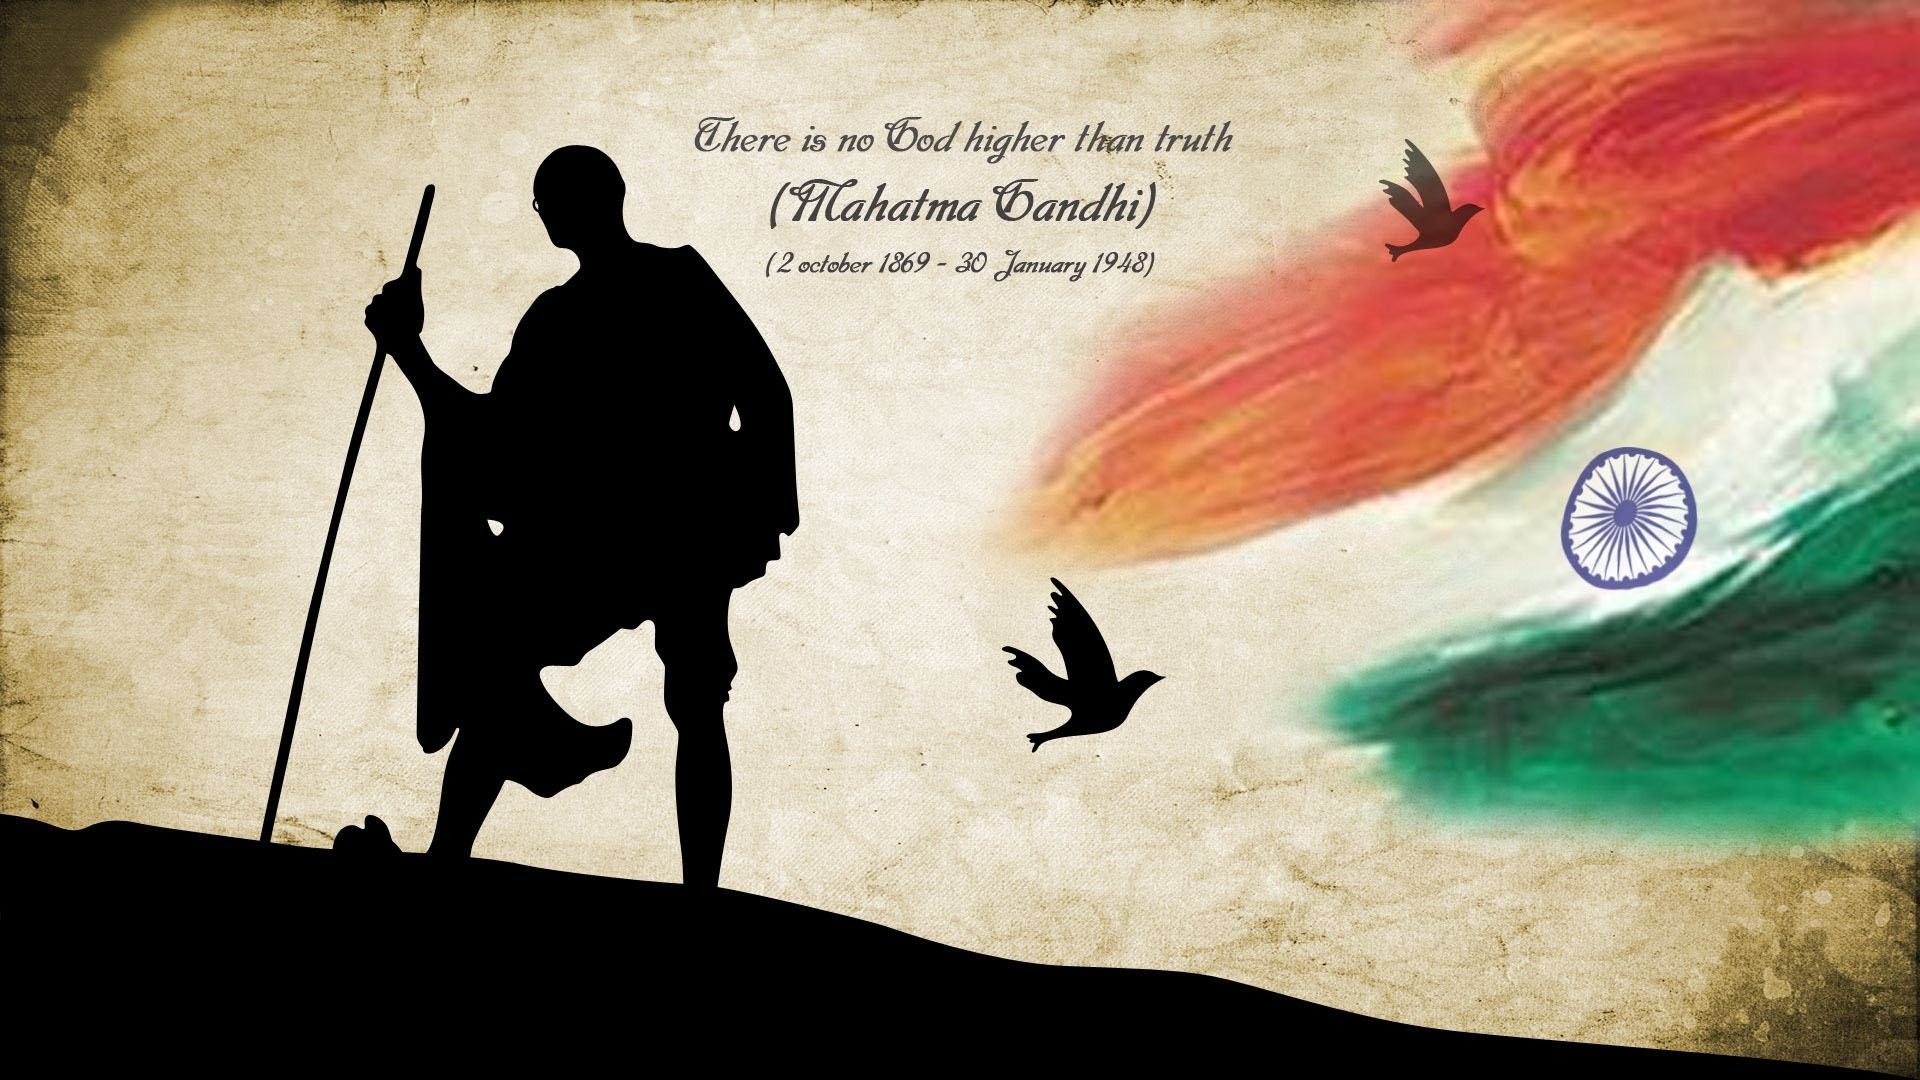 1920x1080 Wallpapers Backgrounds - Mahatma Gandhi Independence Day indian flag  wallpaper frog